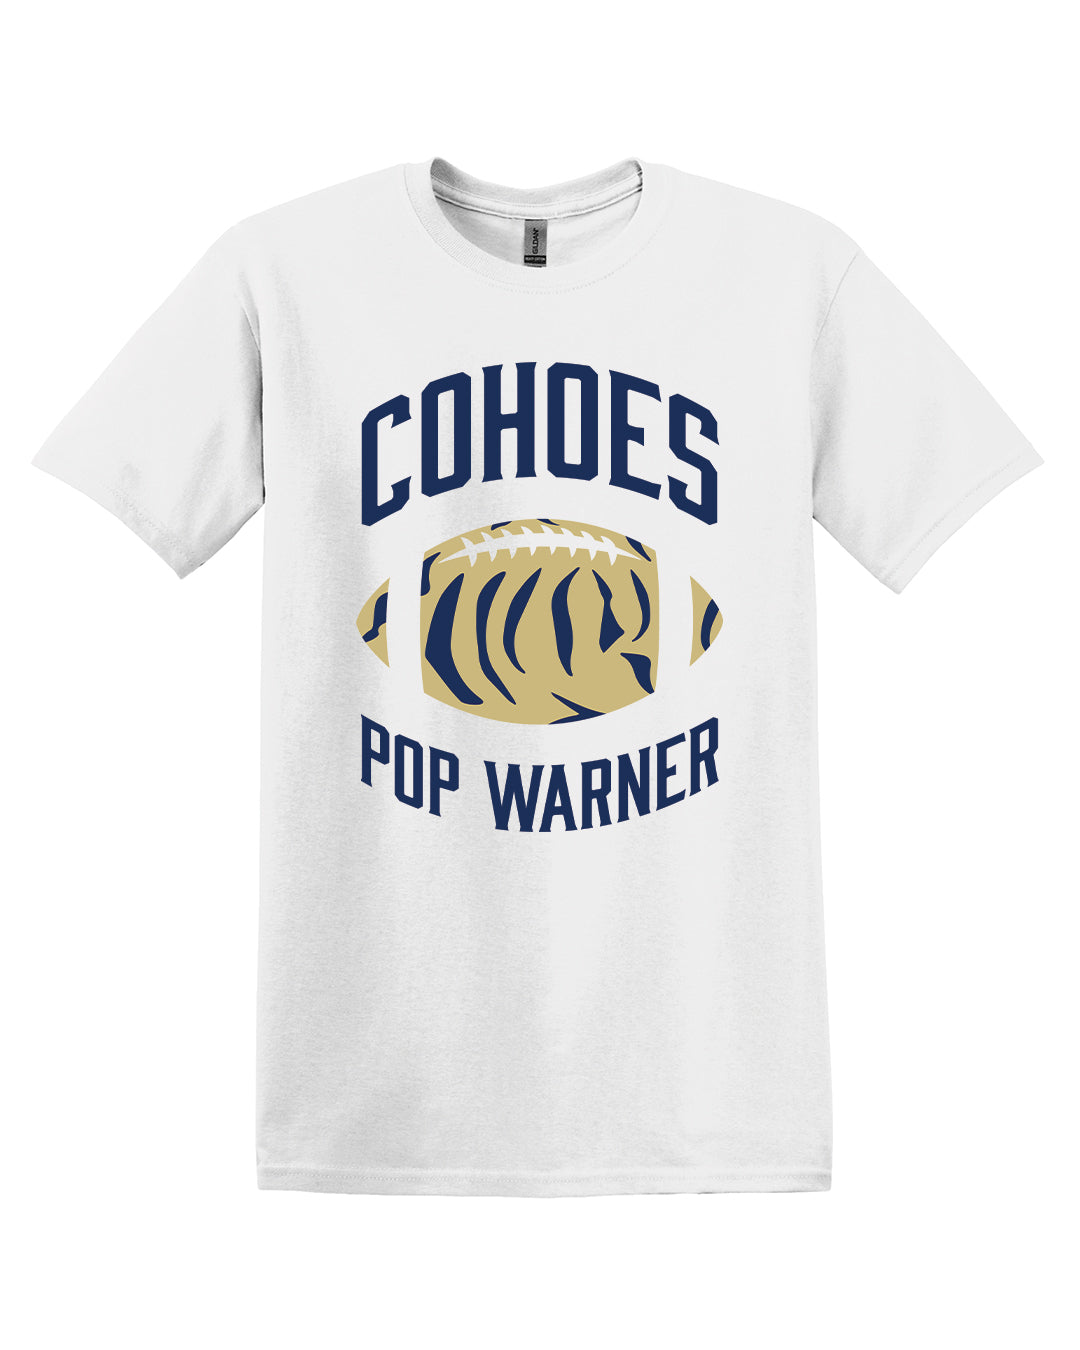 Tiger Football Cohoes Pop Warner Top